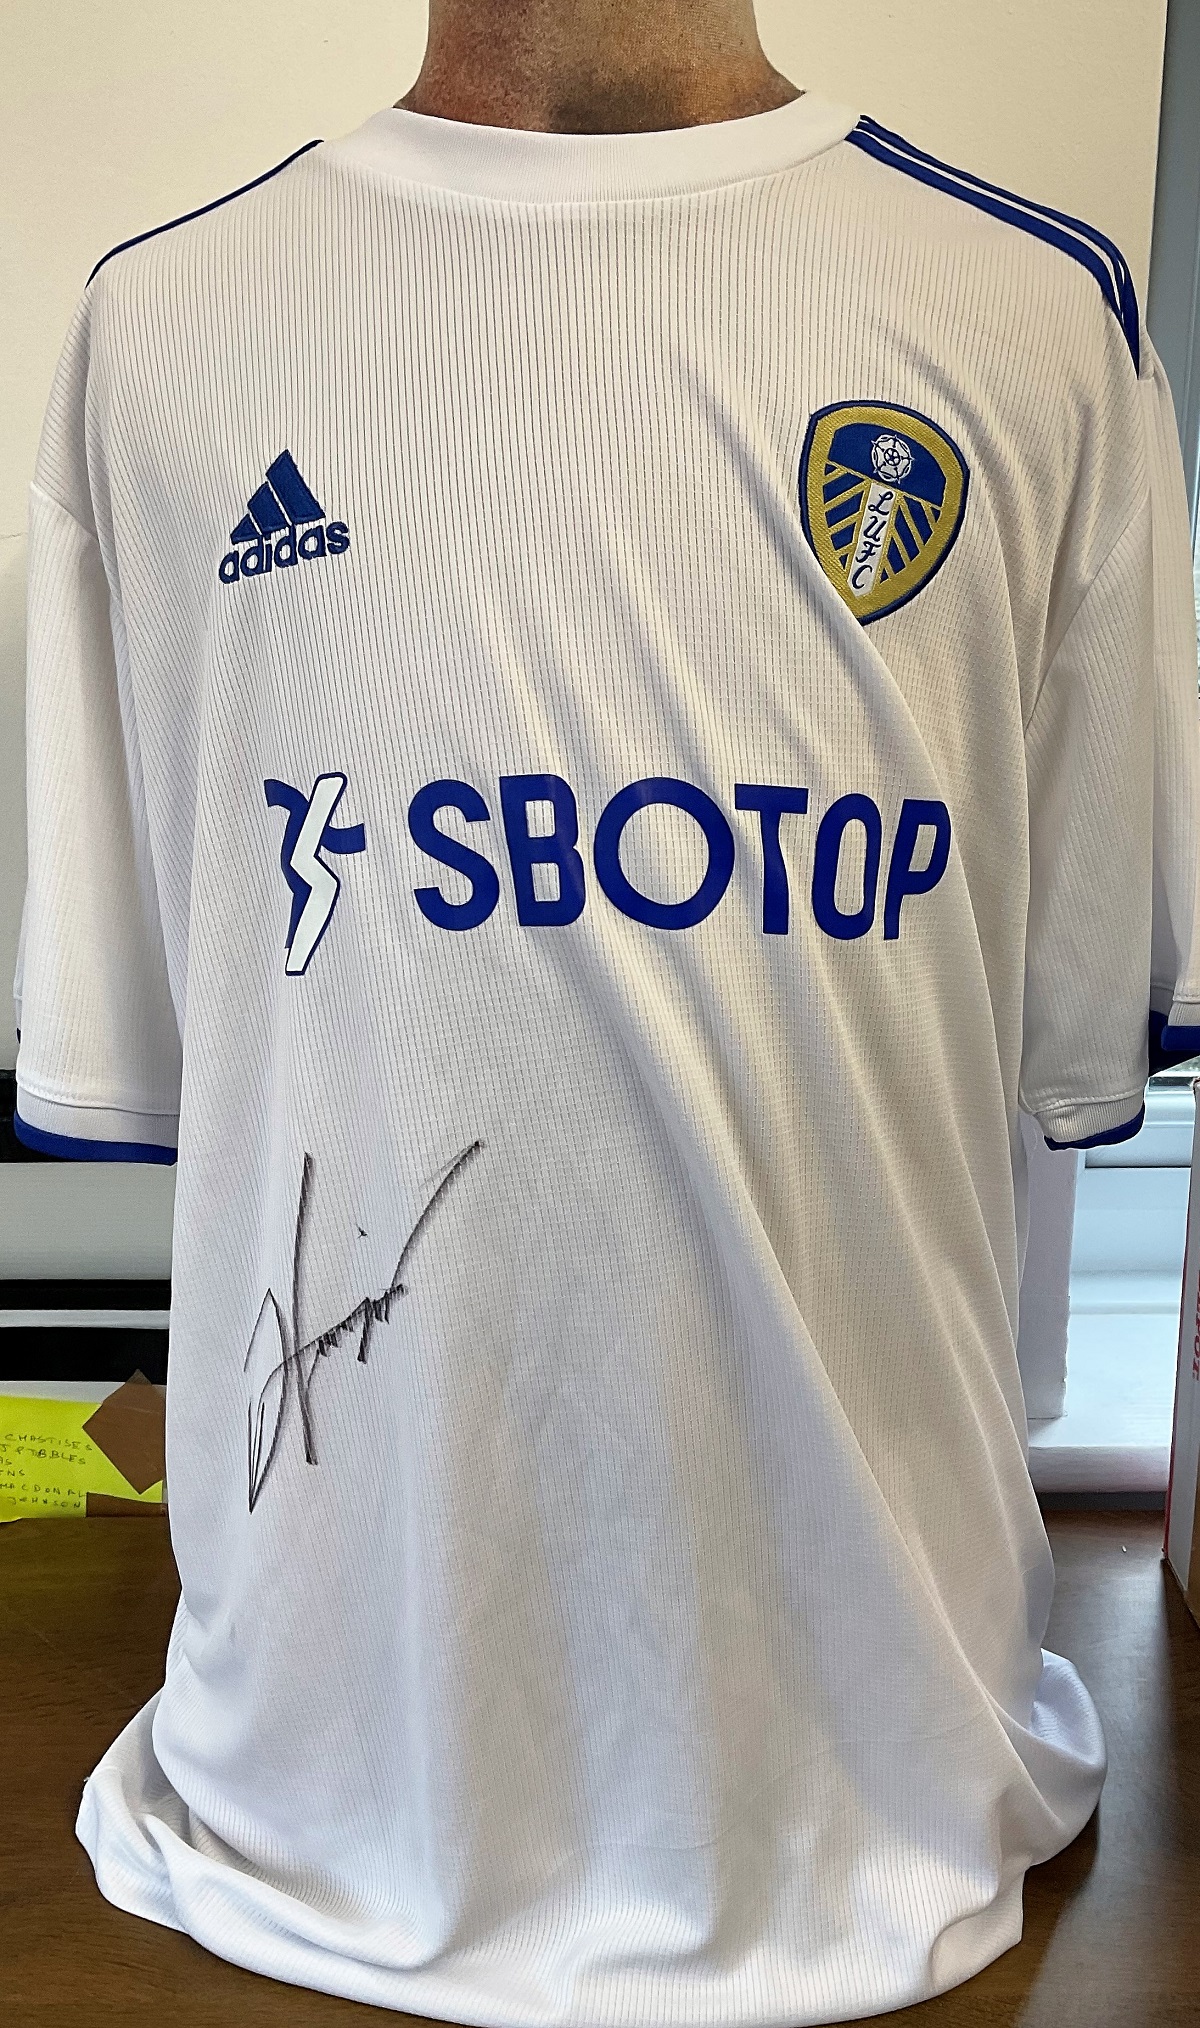 Football Jack Harrison signed Leeds United replica home shirt. Jack David Harrison (born 20 November